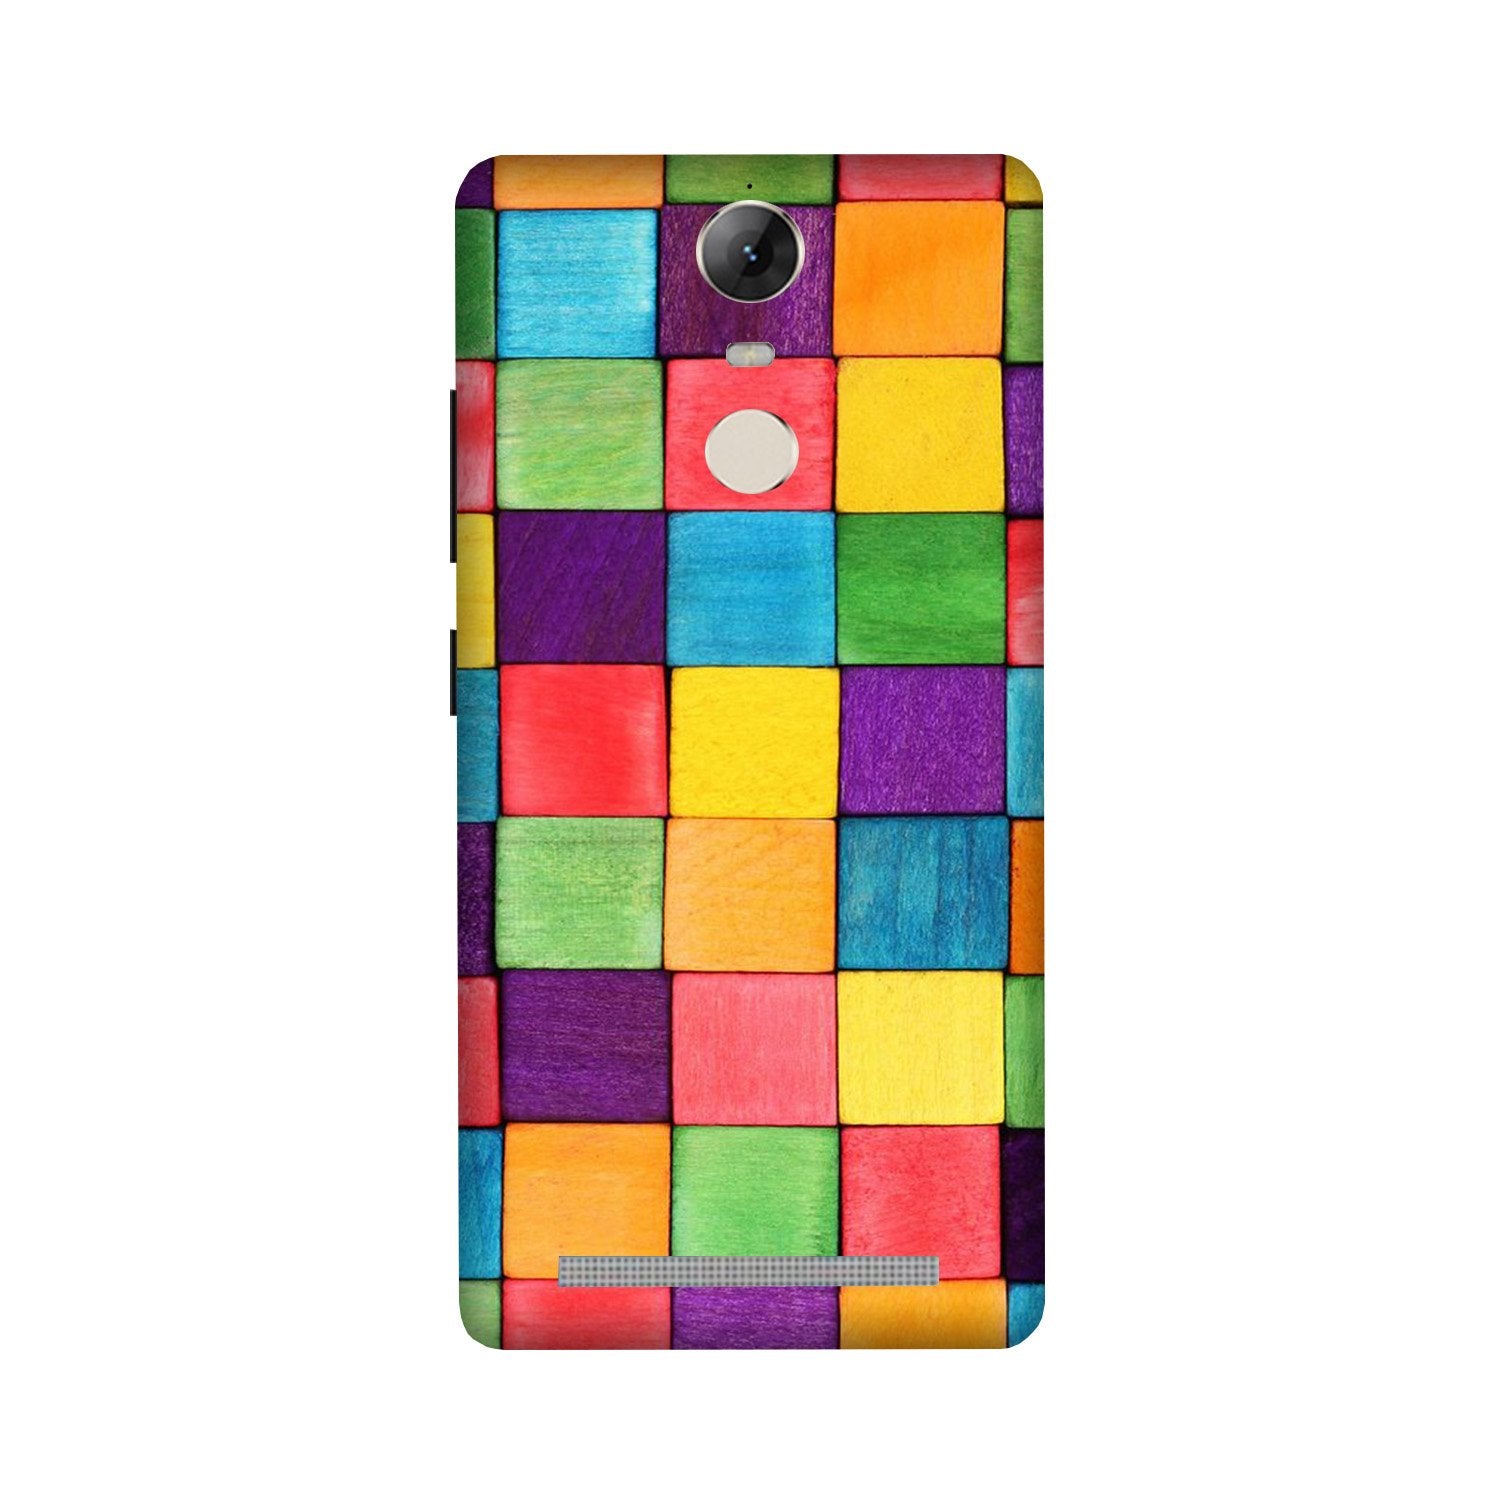 Colorful Square Case for Lenovo Vibe K5 Note (Design No. 218)